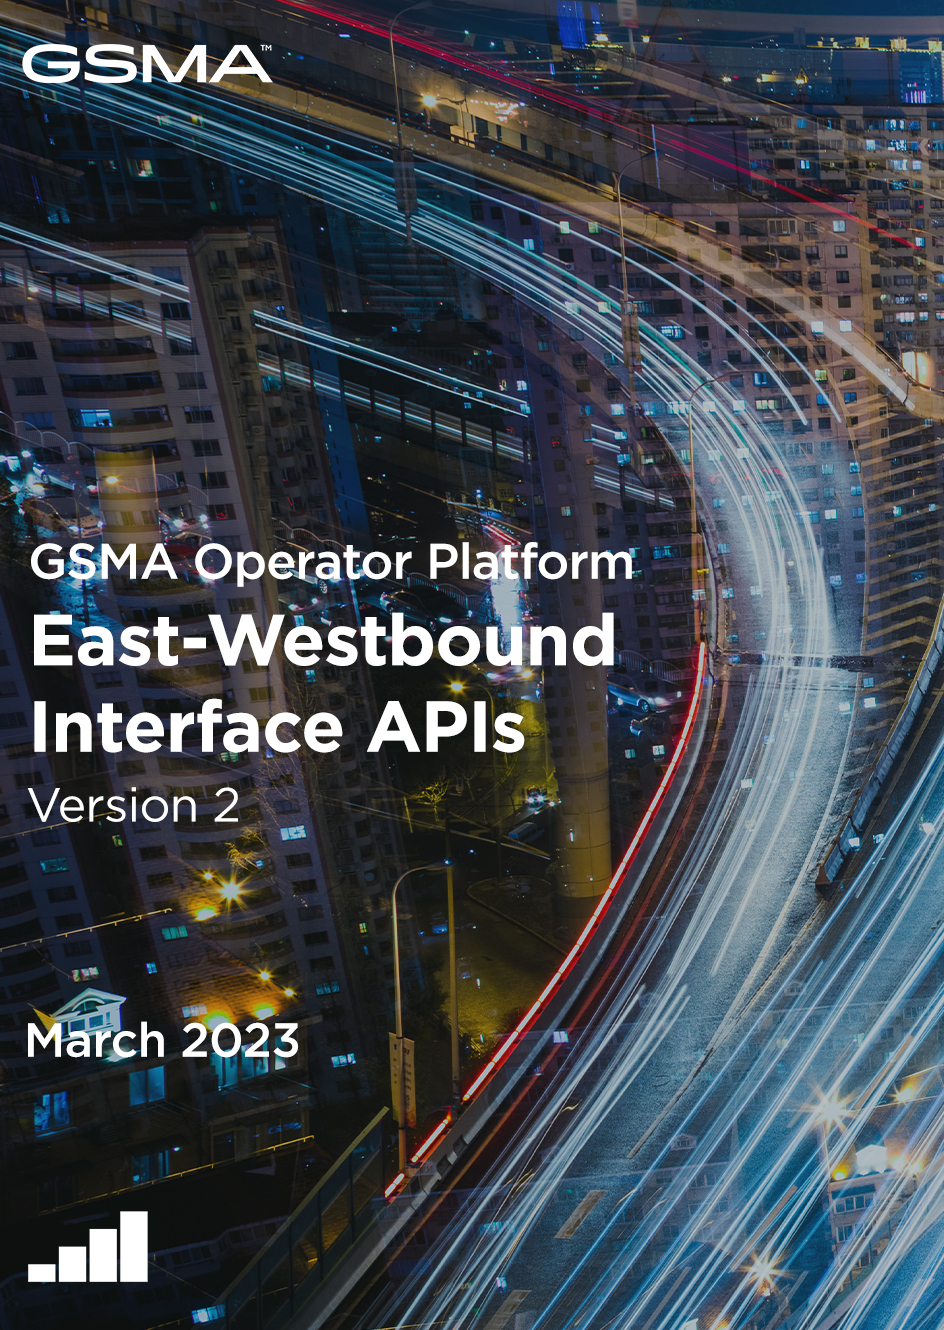 GSMA Operator Platform Group – East-Westbound Interface APIs image